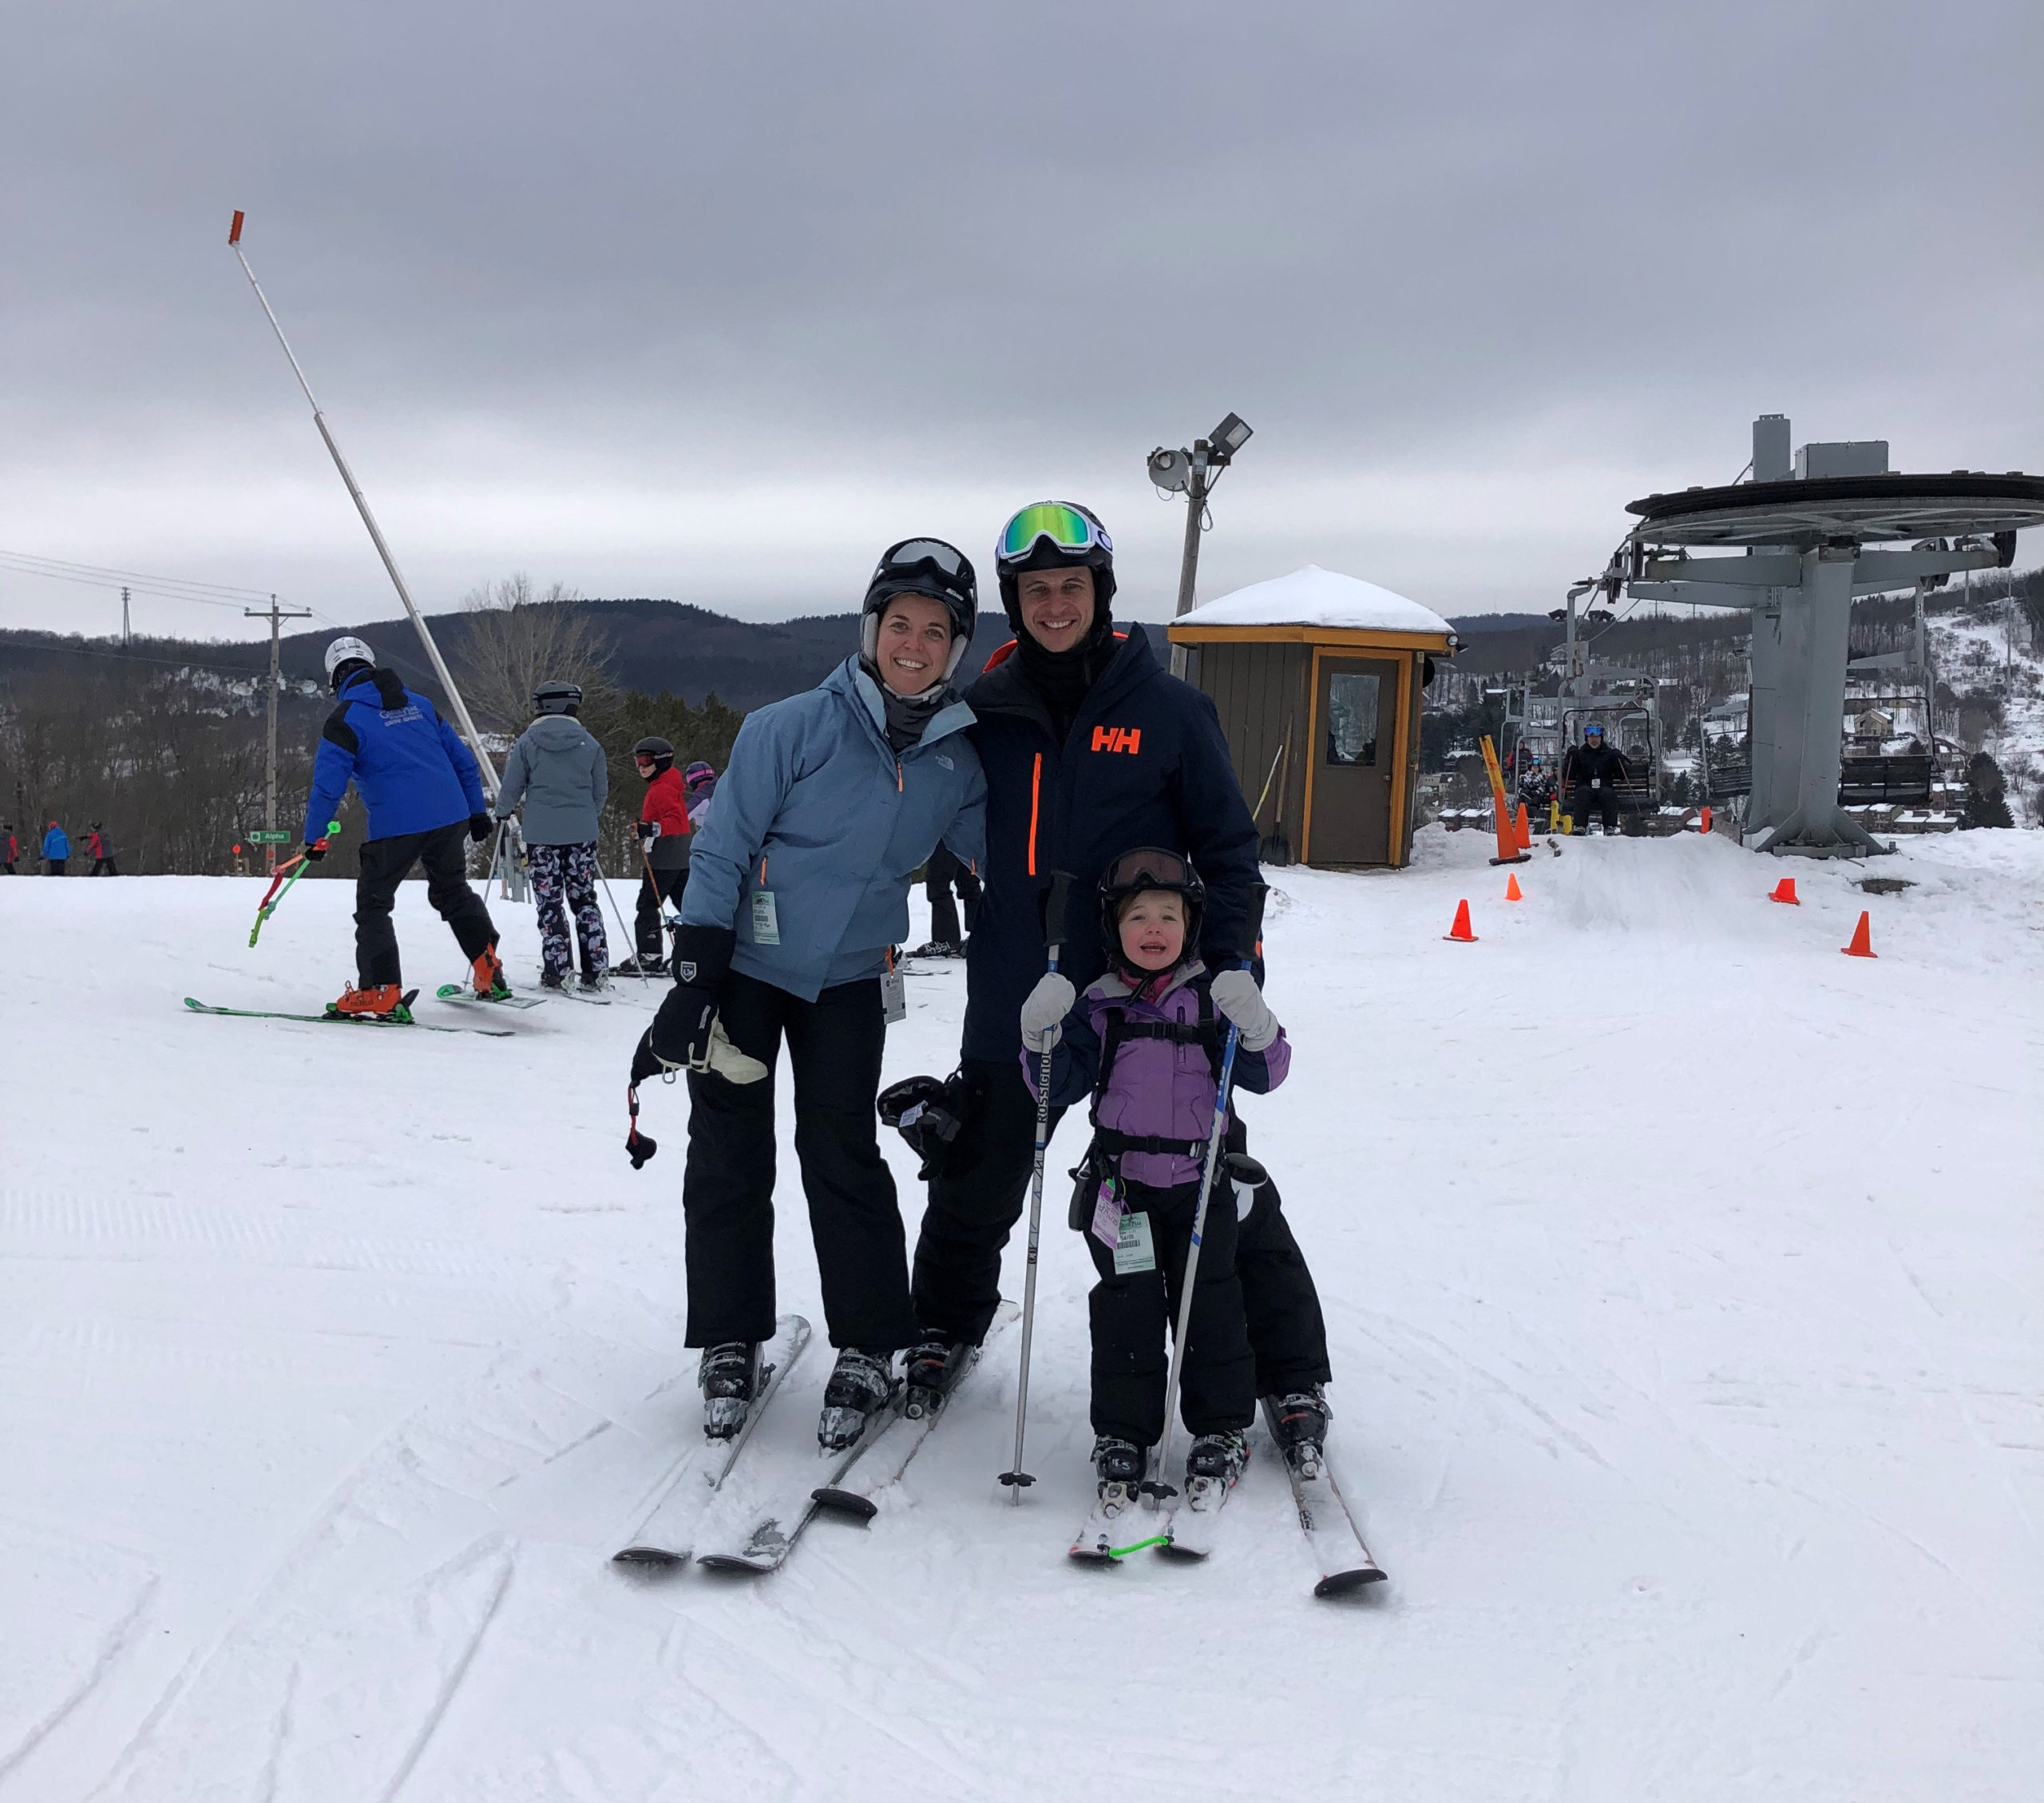 Rob Olivet and family at Greek Peak Mountain Ski Resort in Cortland, NY.